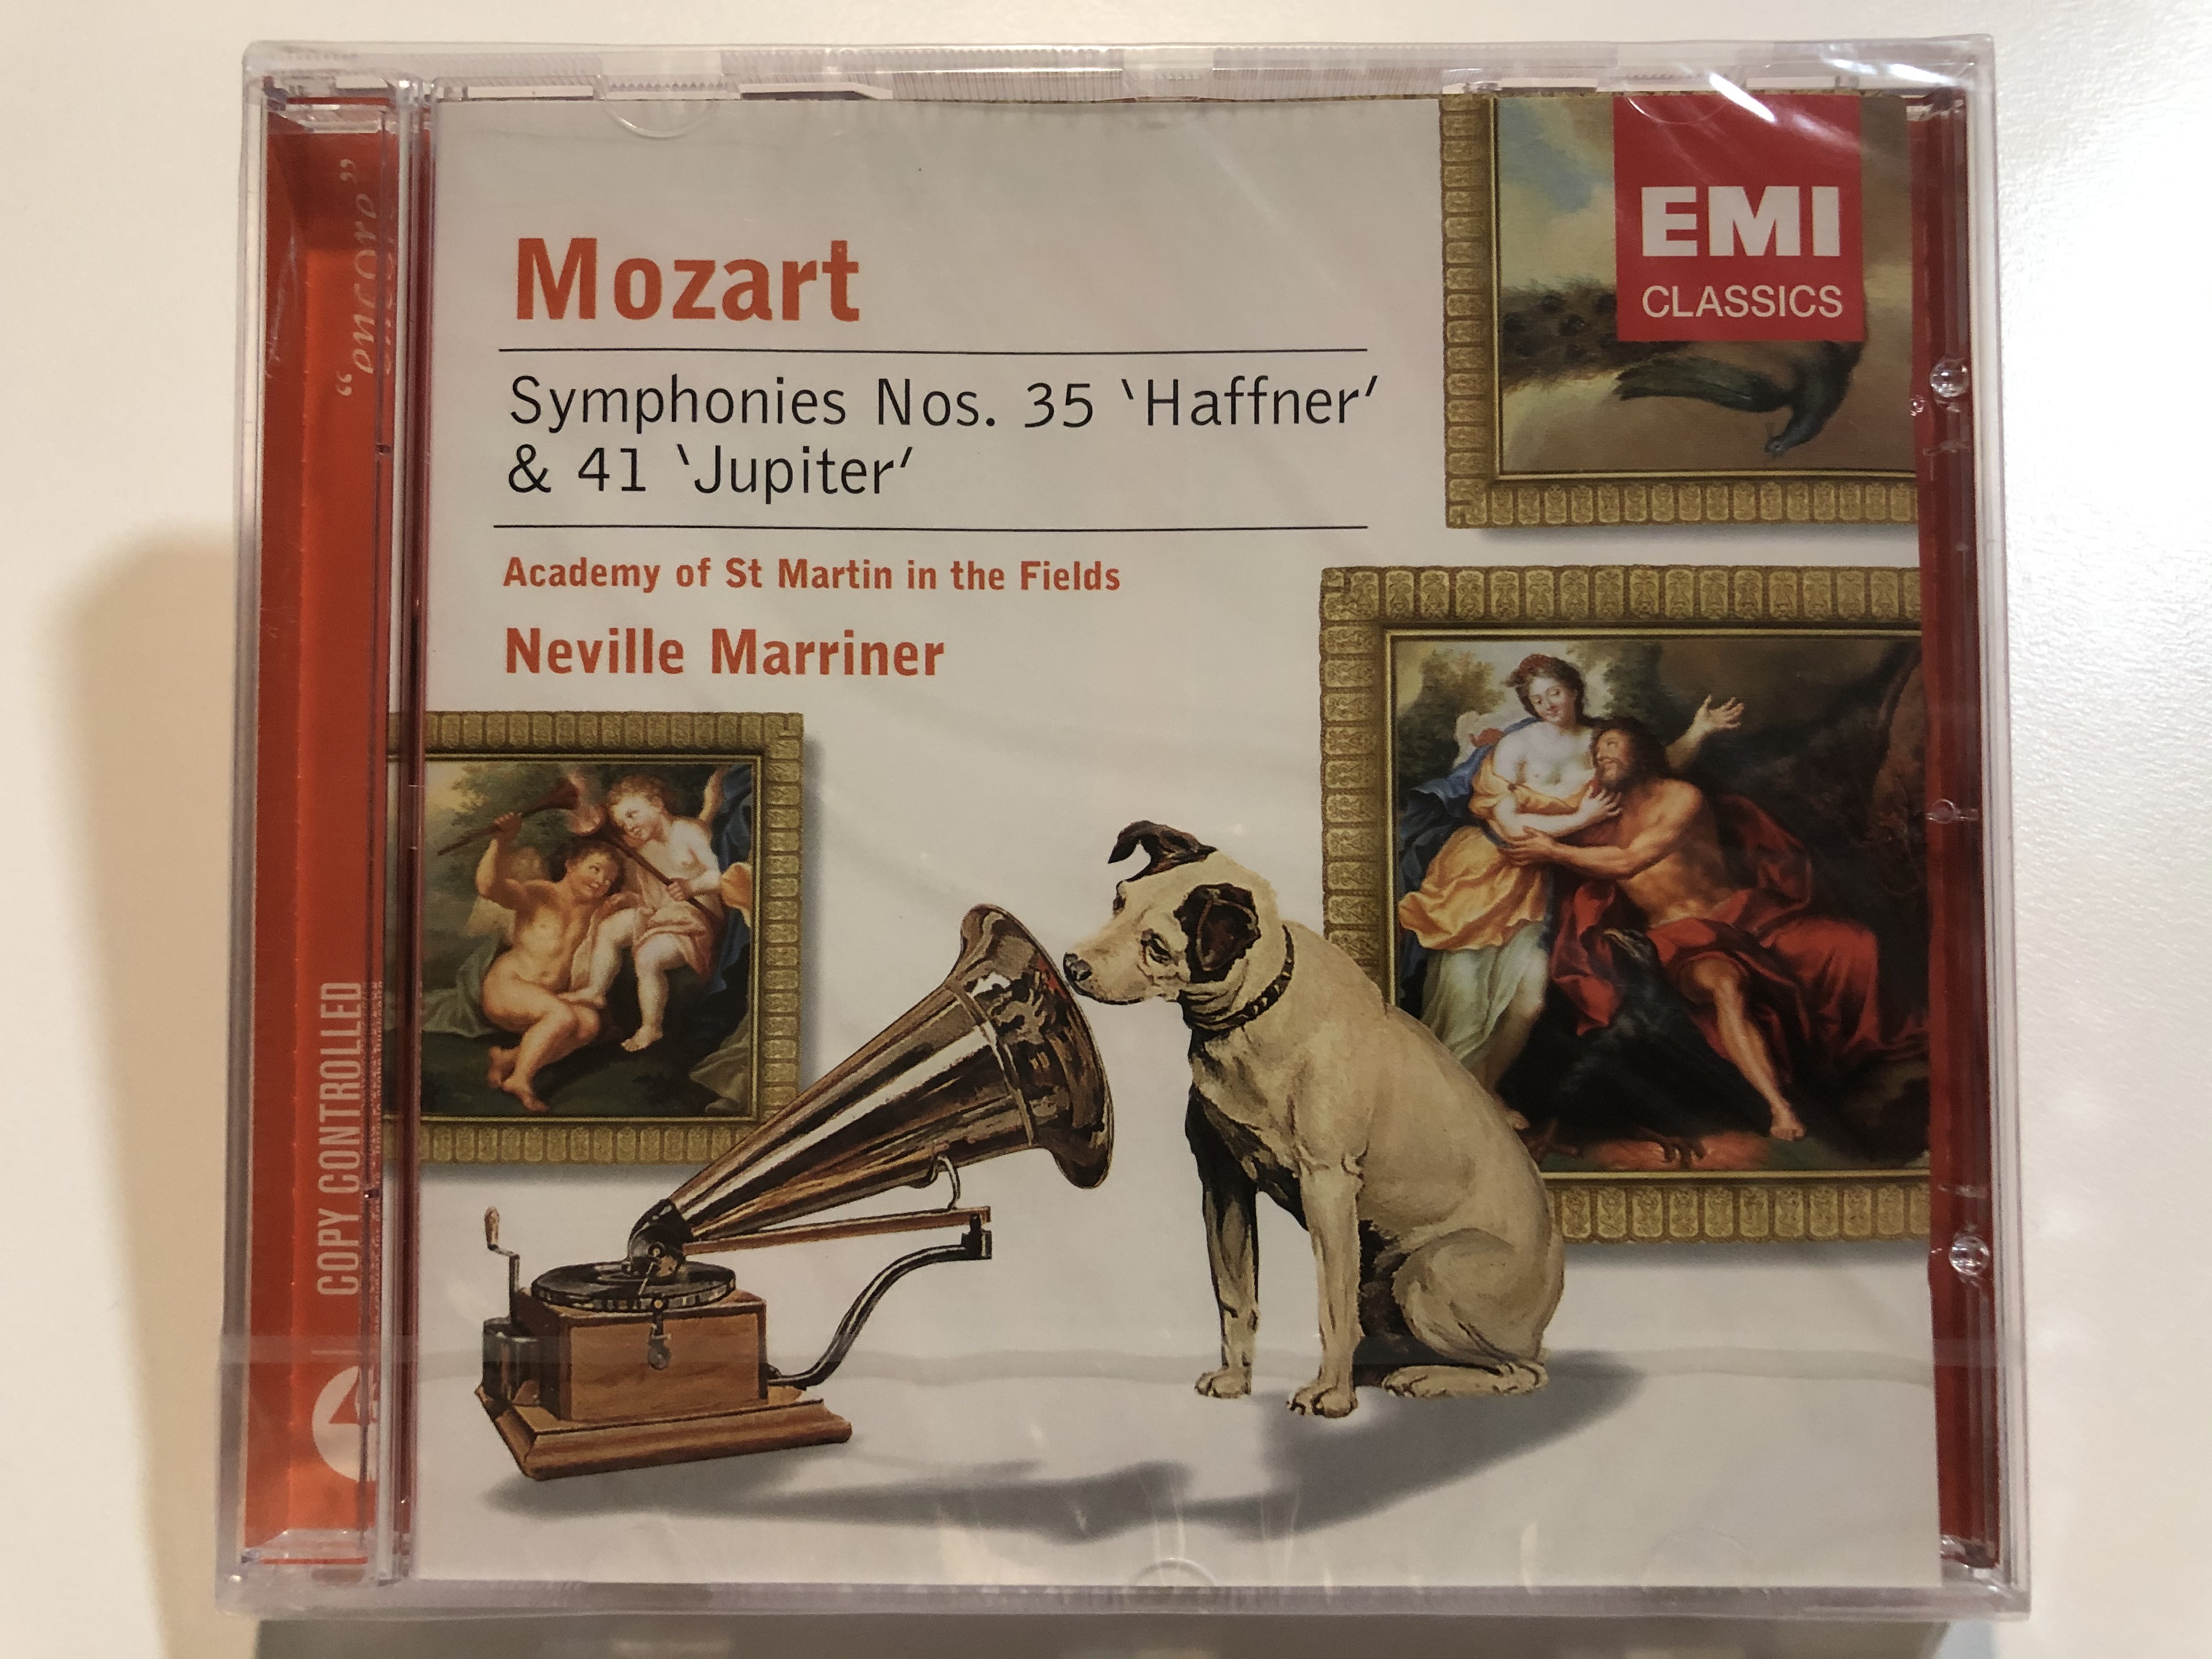 mozart-symphonies-nos.-35-haffner-41-jupiter-academy-of-st-martin-in-the-fields-neville-marriner-emi-classics-audio-cd-2004-stereo-724358569520-1-.jpg